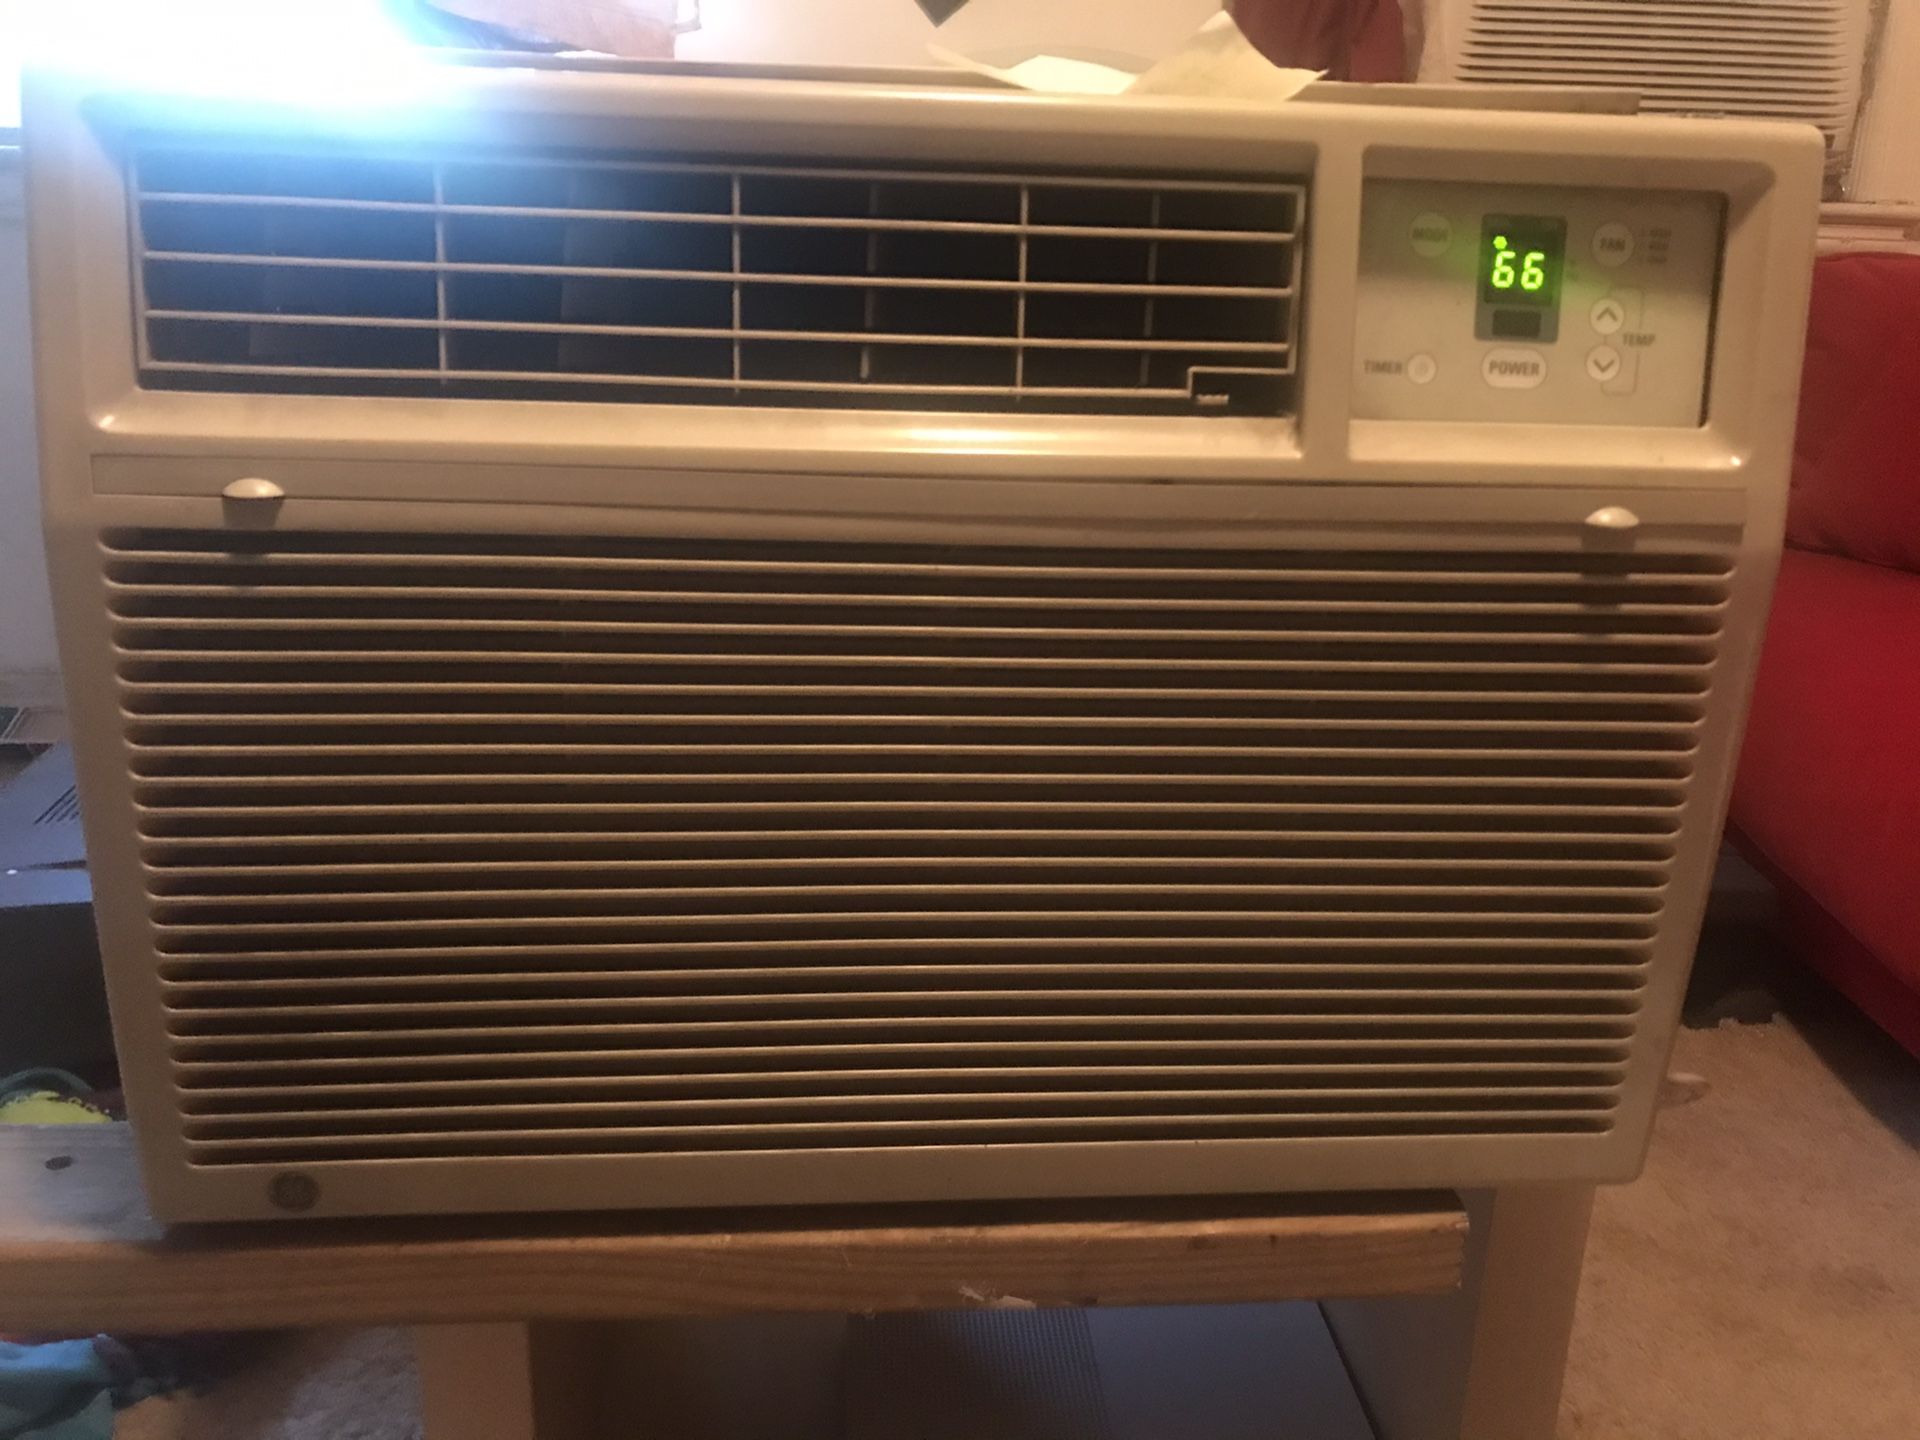 12,400 BTU air conditioner blows very very cold air